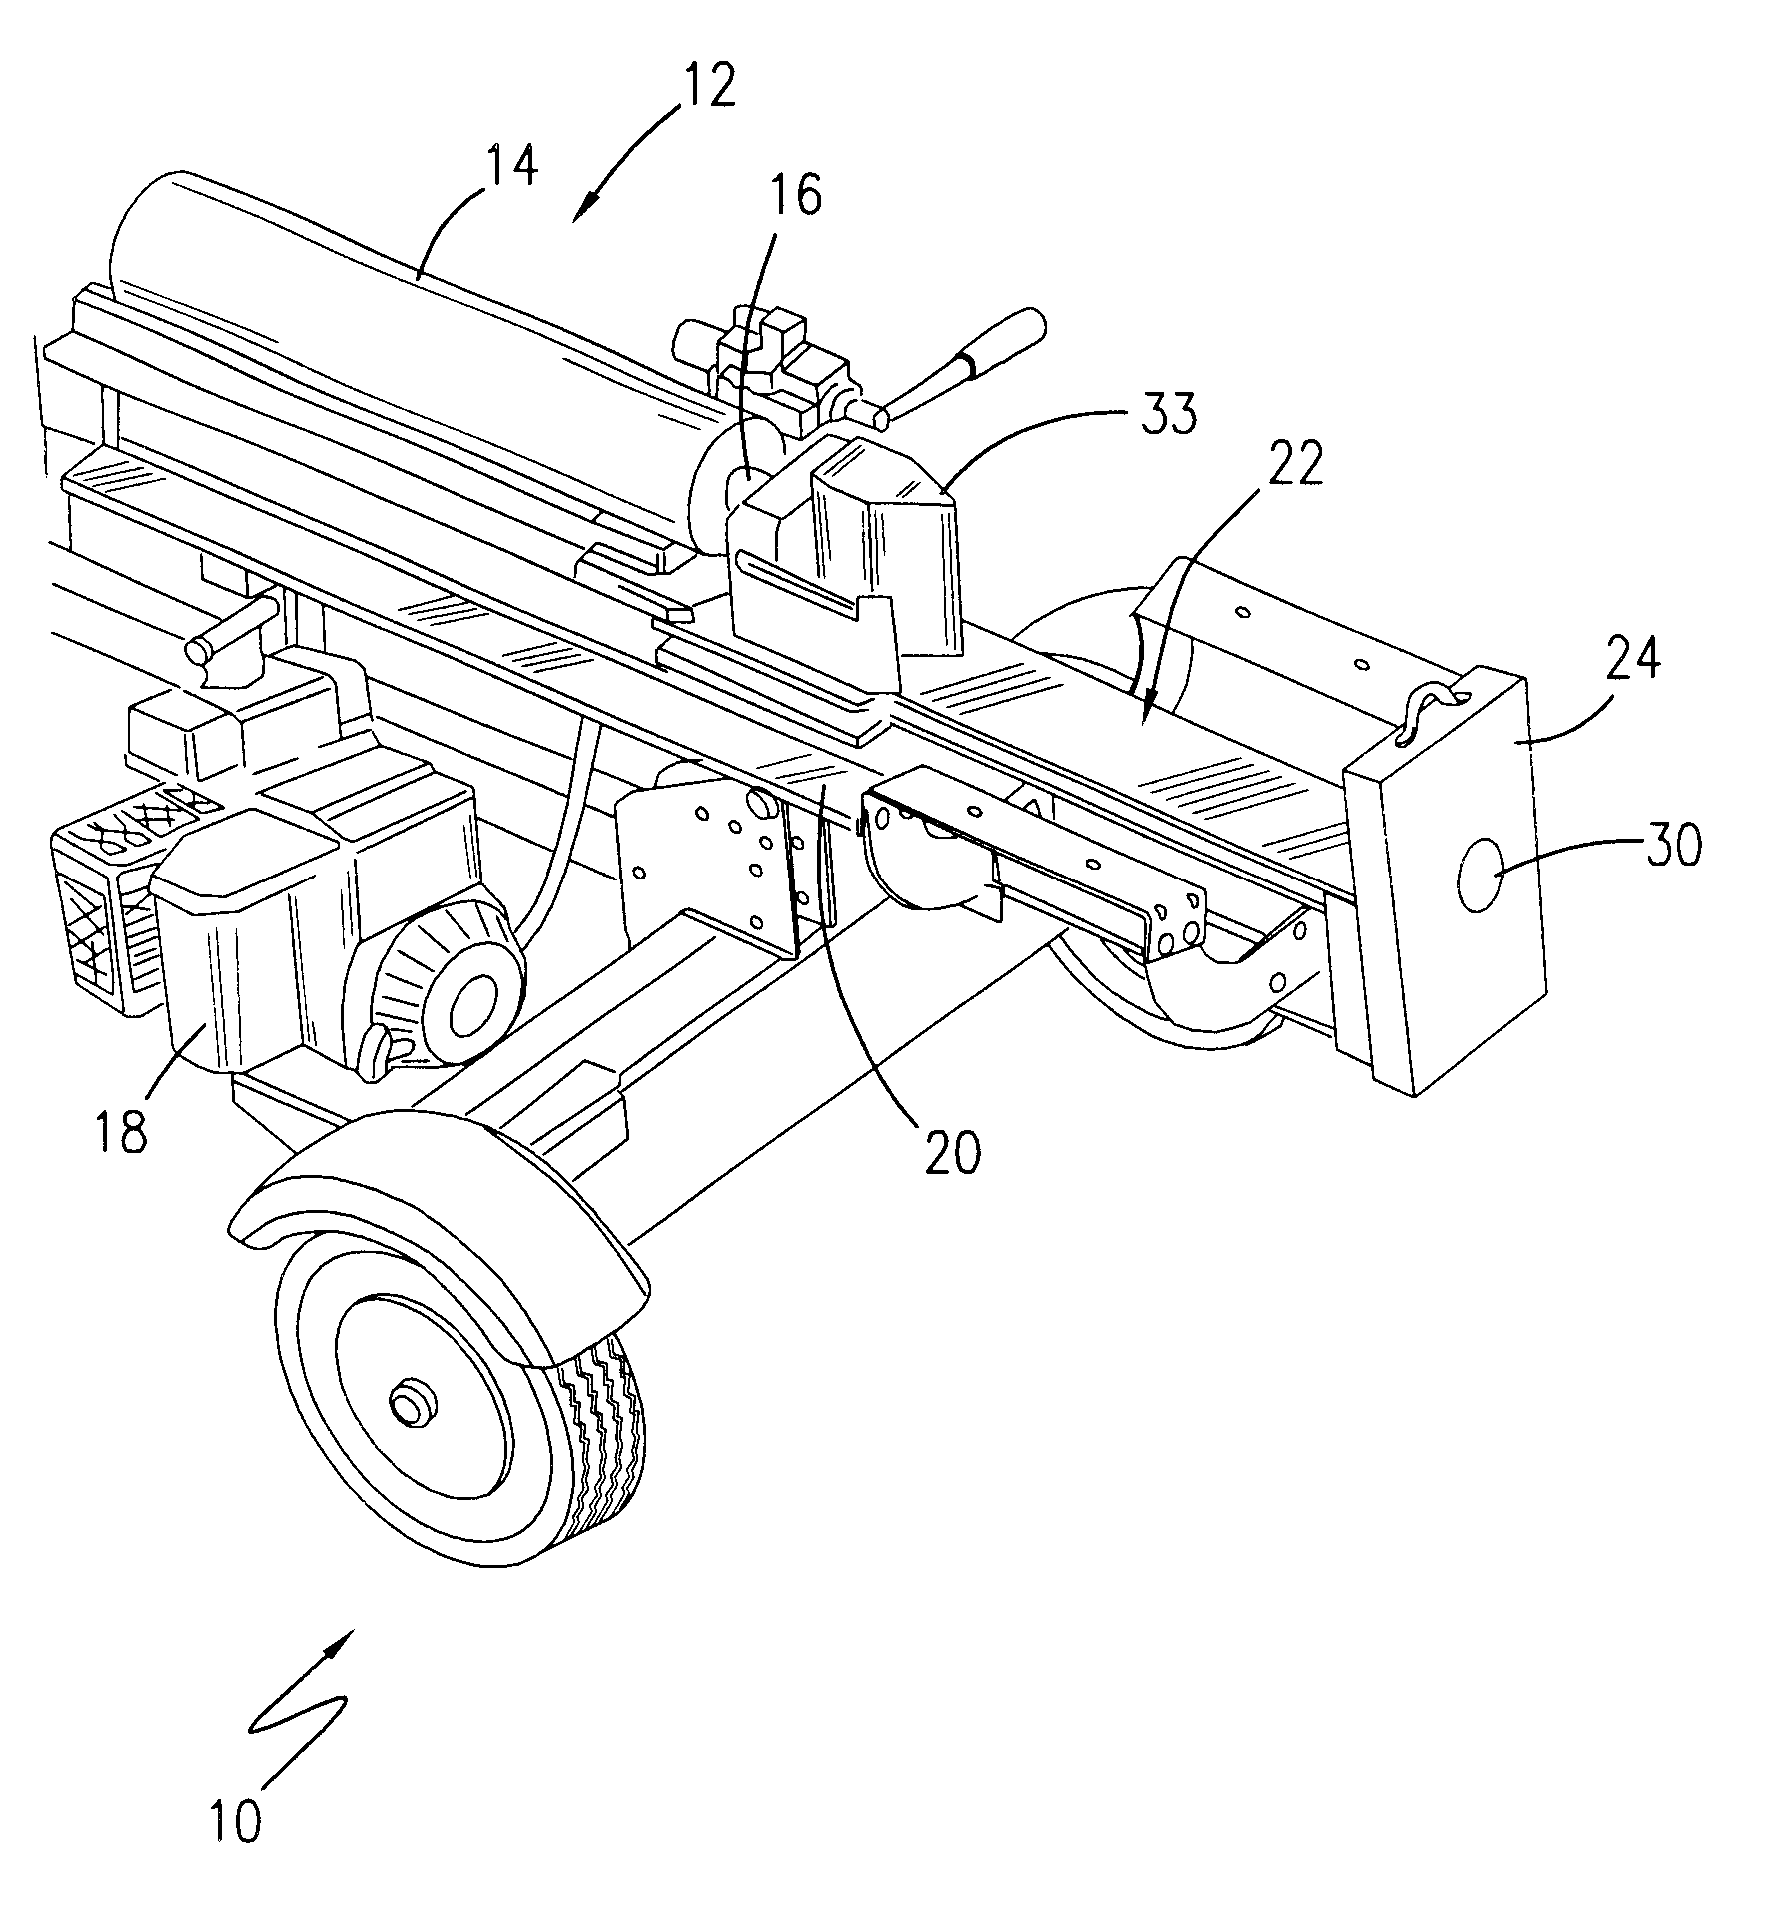 Multi-purpose hydraulic press, metal bending, and log splitting apparatus